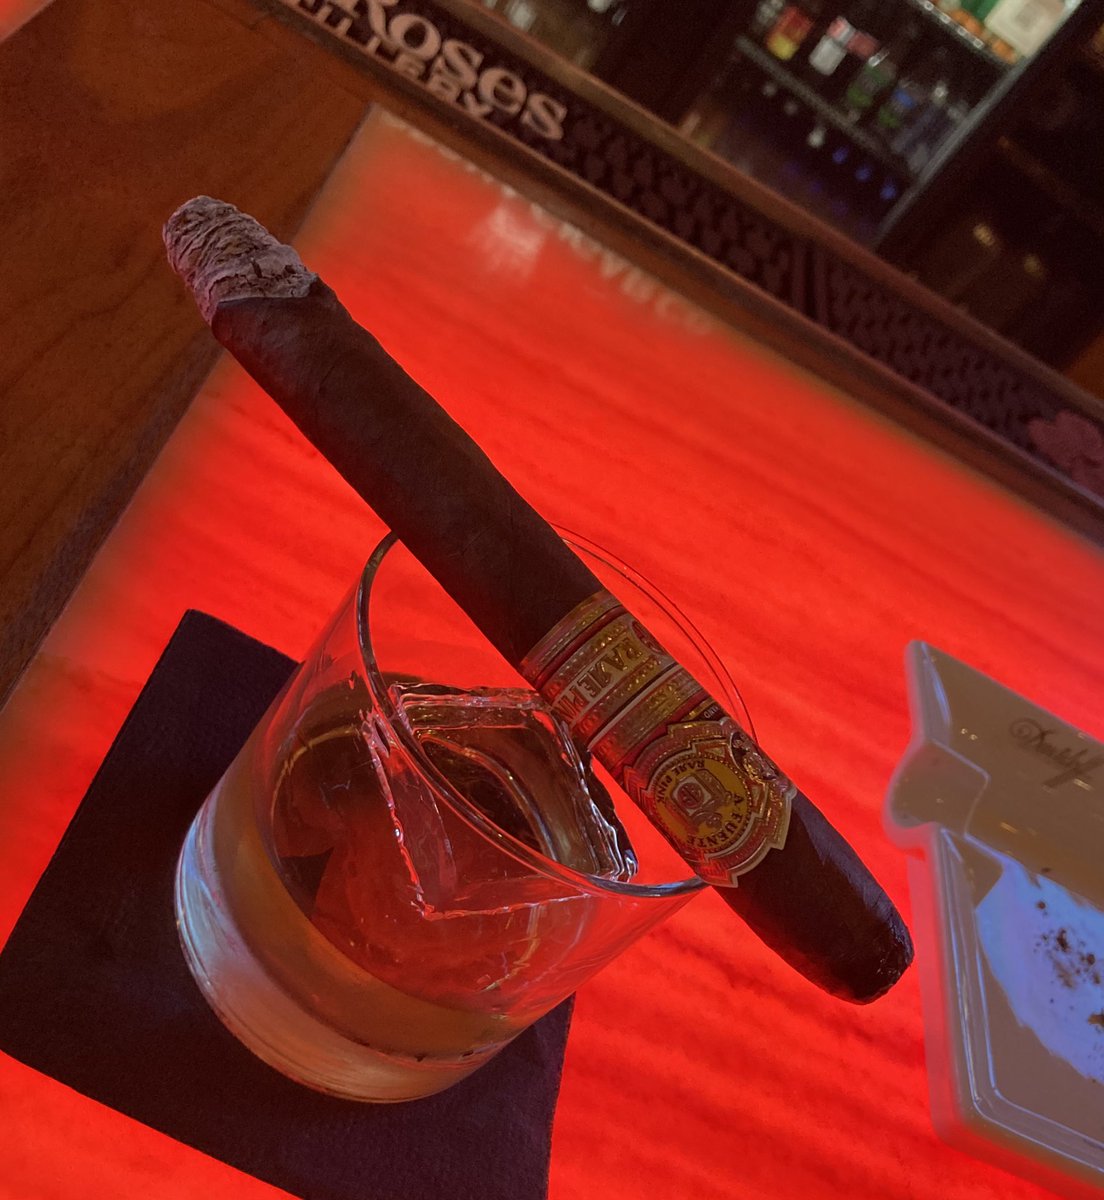 Don’t Judge me 6 cigars in 36 hours. I fucking love Tampa. #RarePink #SophisticatedHooker  #Hibiki @AFuenteCigars @CoronaCigars 

◾️#Cigars #CigarOfTheDay #CigarLover #CigarSmoker #CigarAficionado #CigarSociety #CigarClub #CigarCompanion #CigarConnoisseur #TheDailyStick ◾️